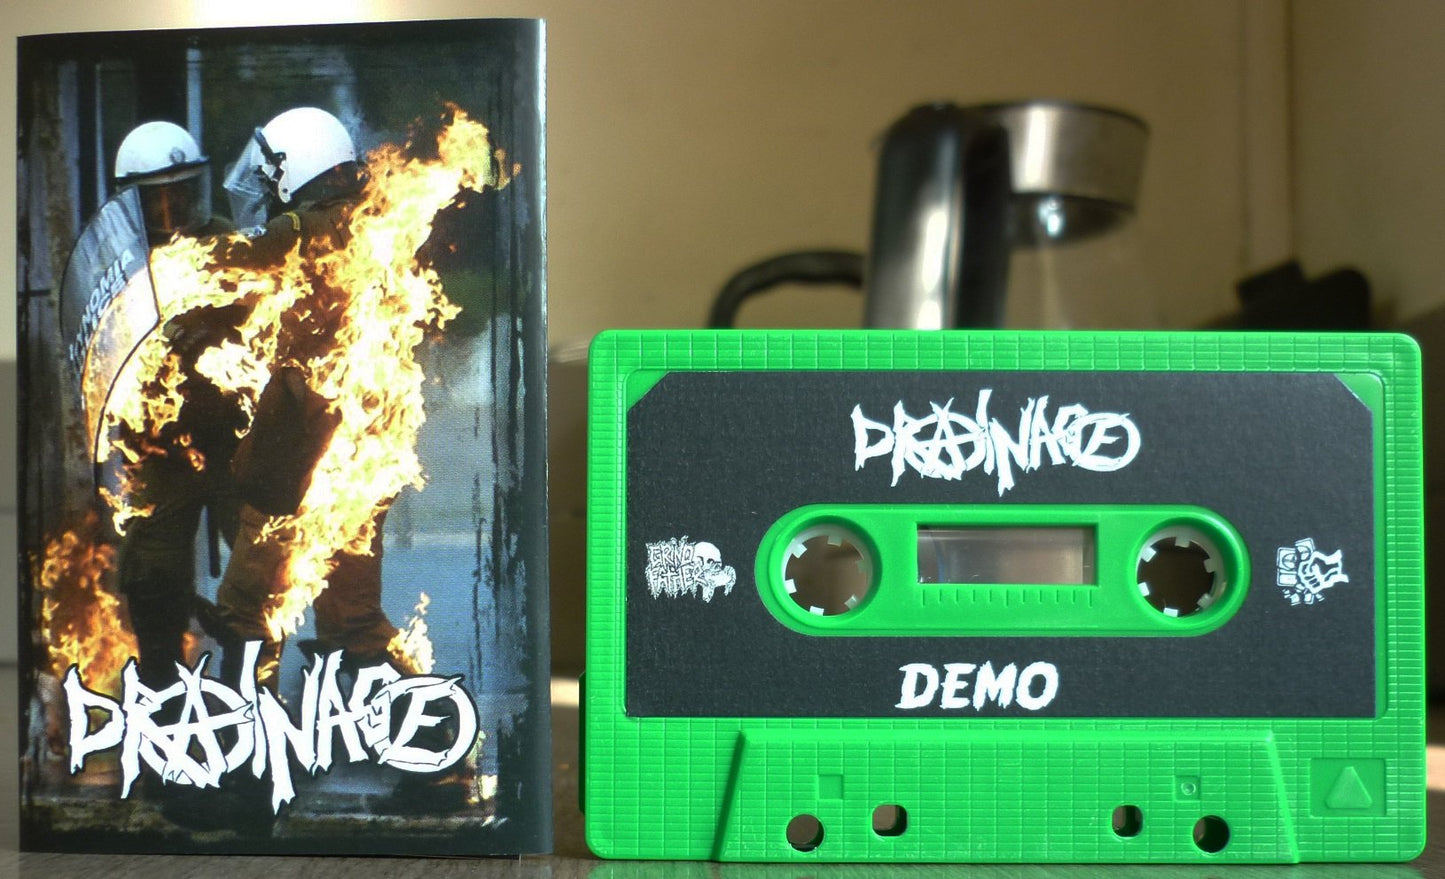 DRAINAGE - Demo 2015 Tape